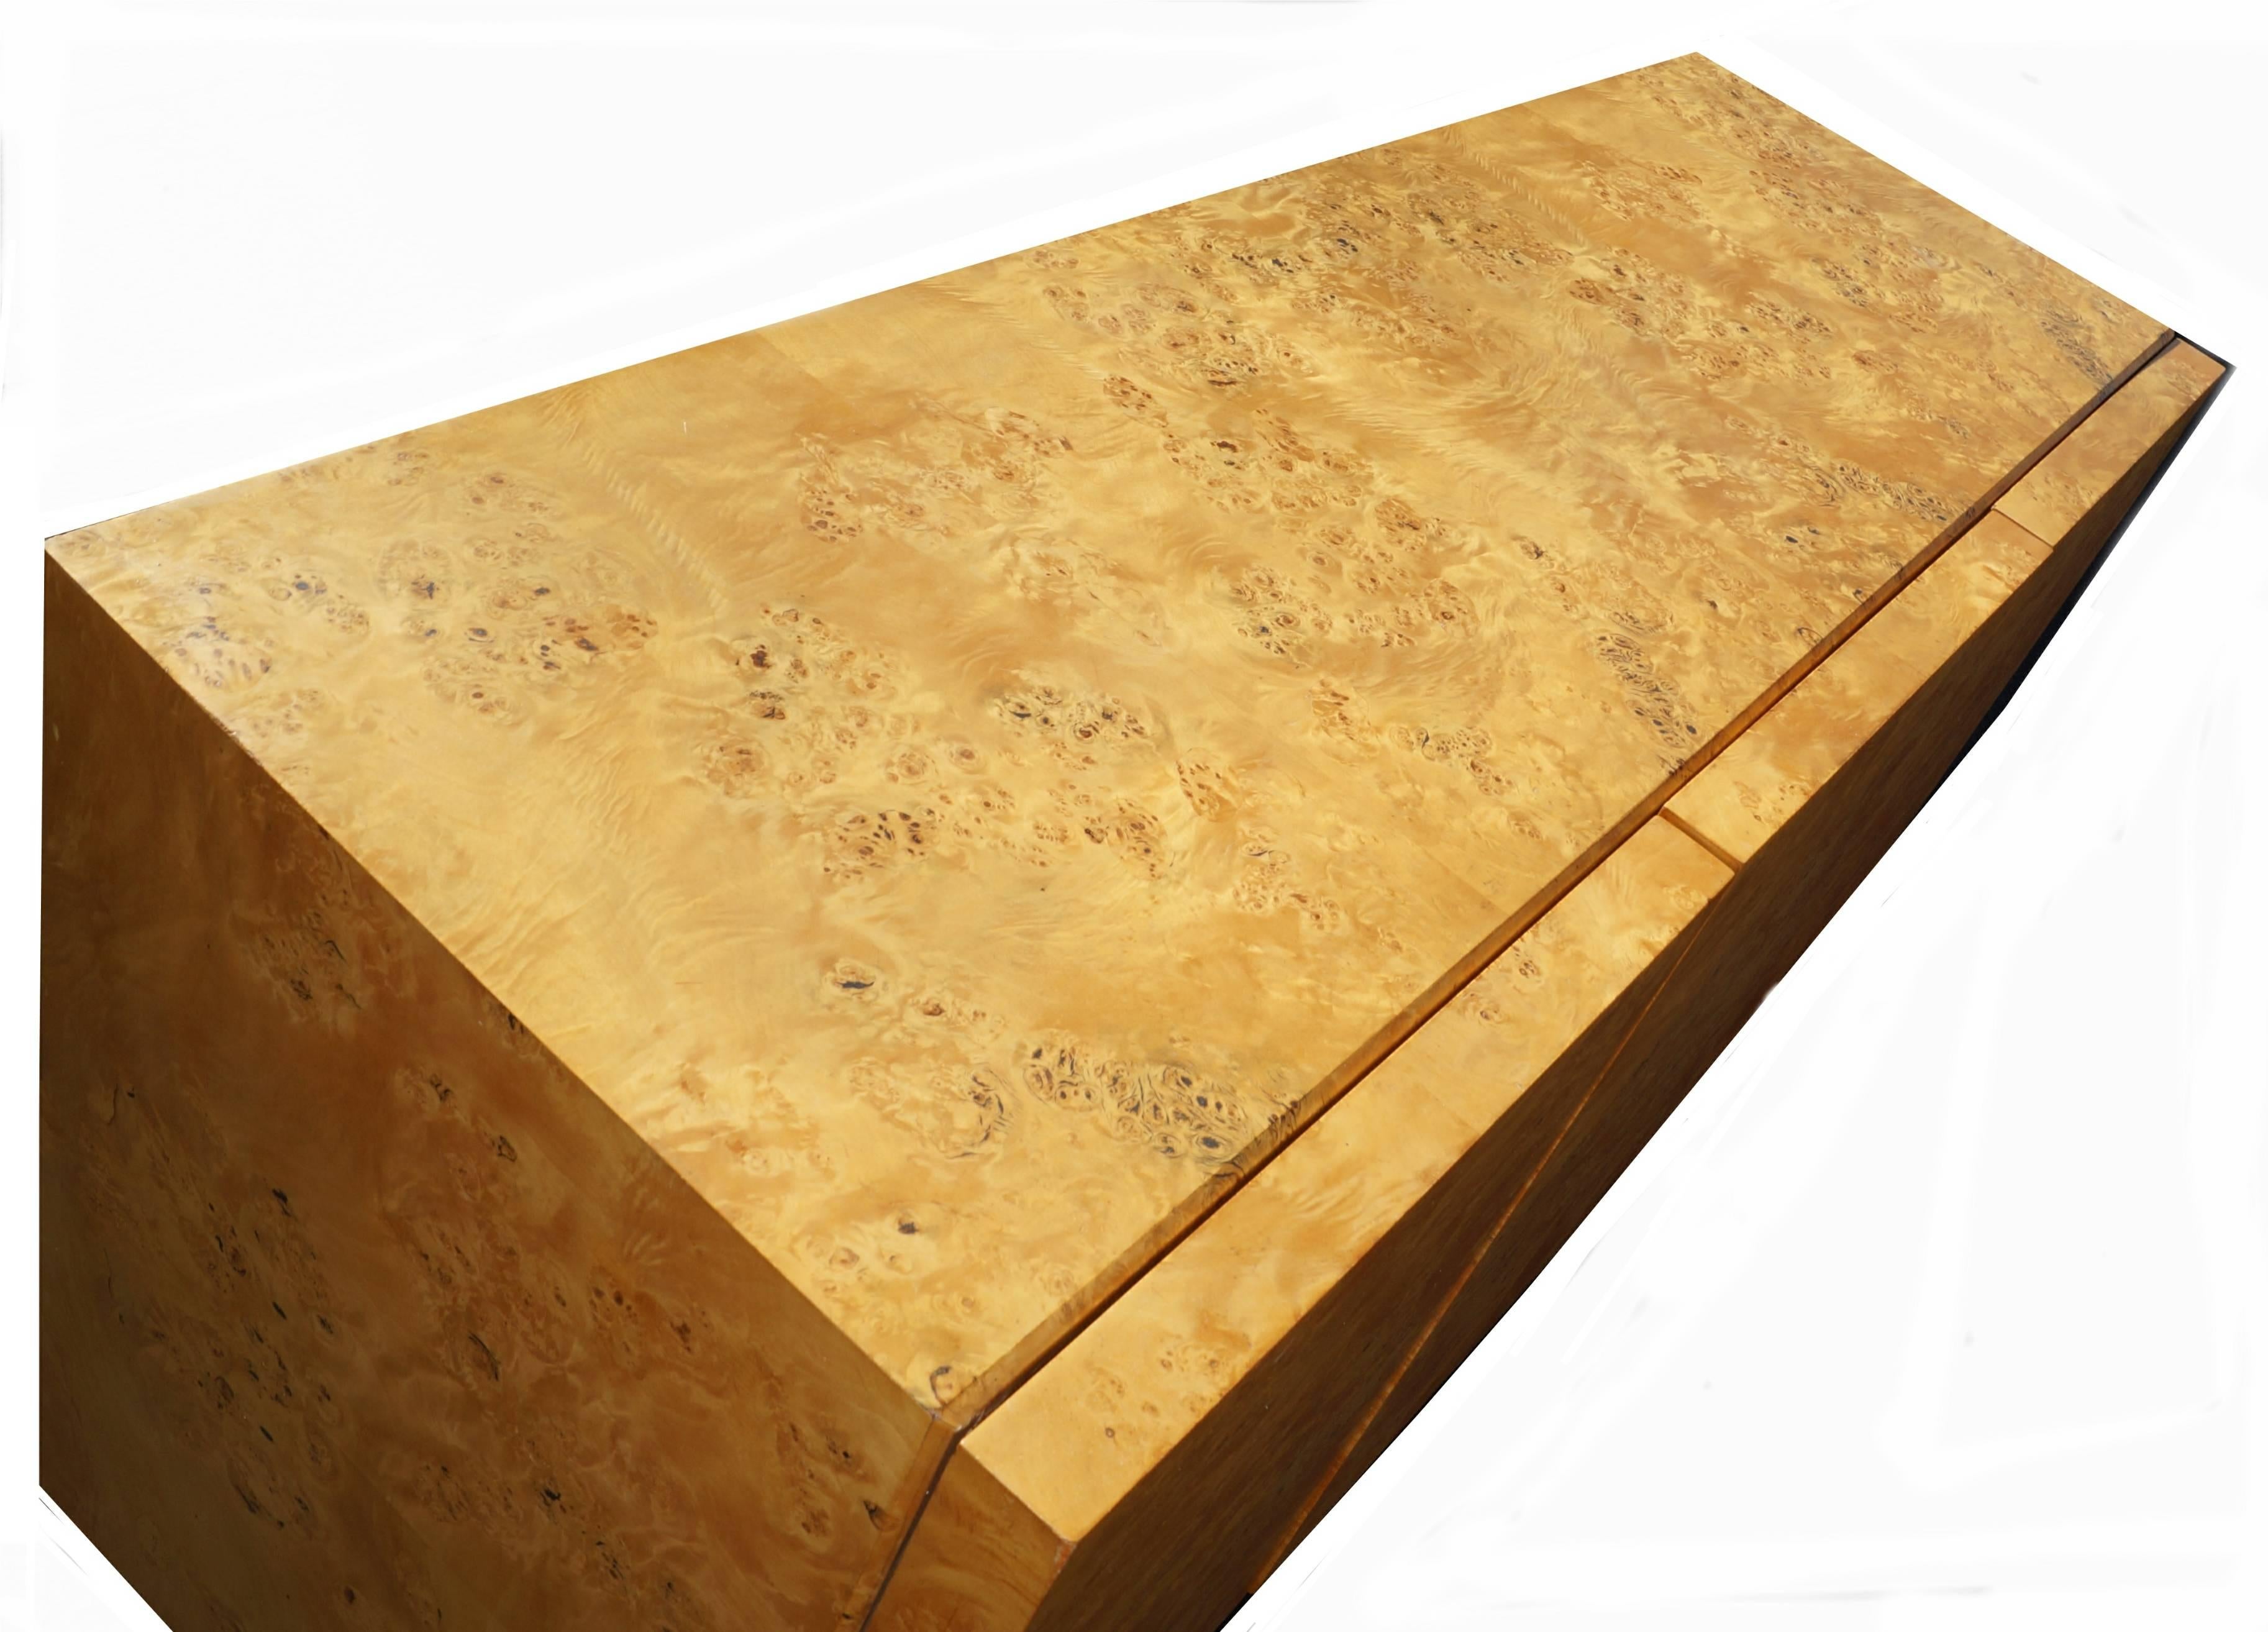 burl wood sideboard